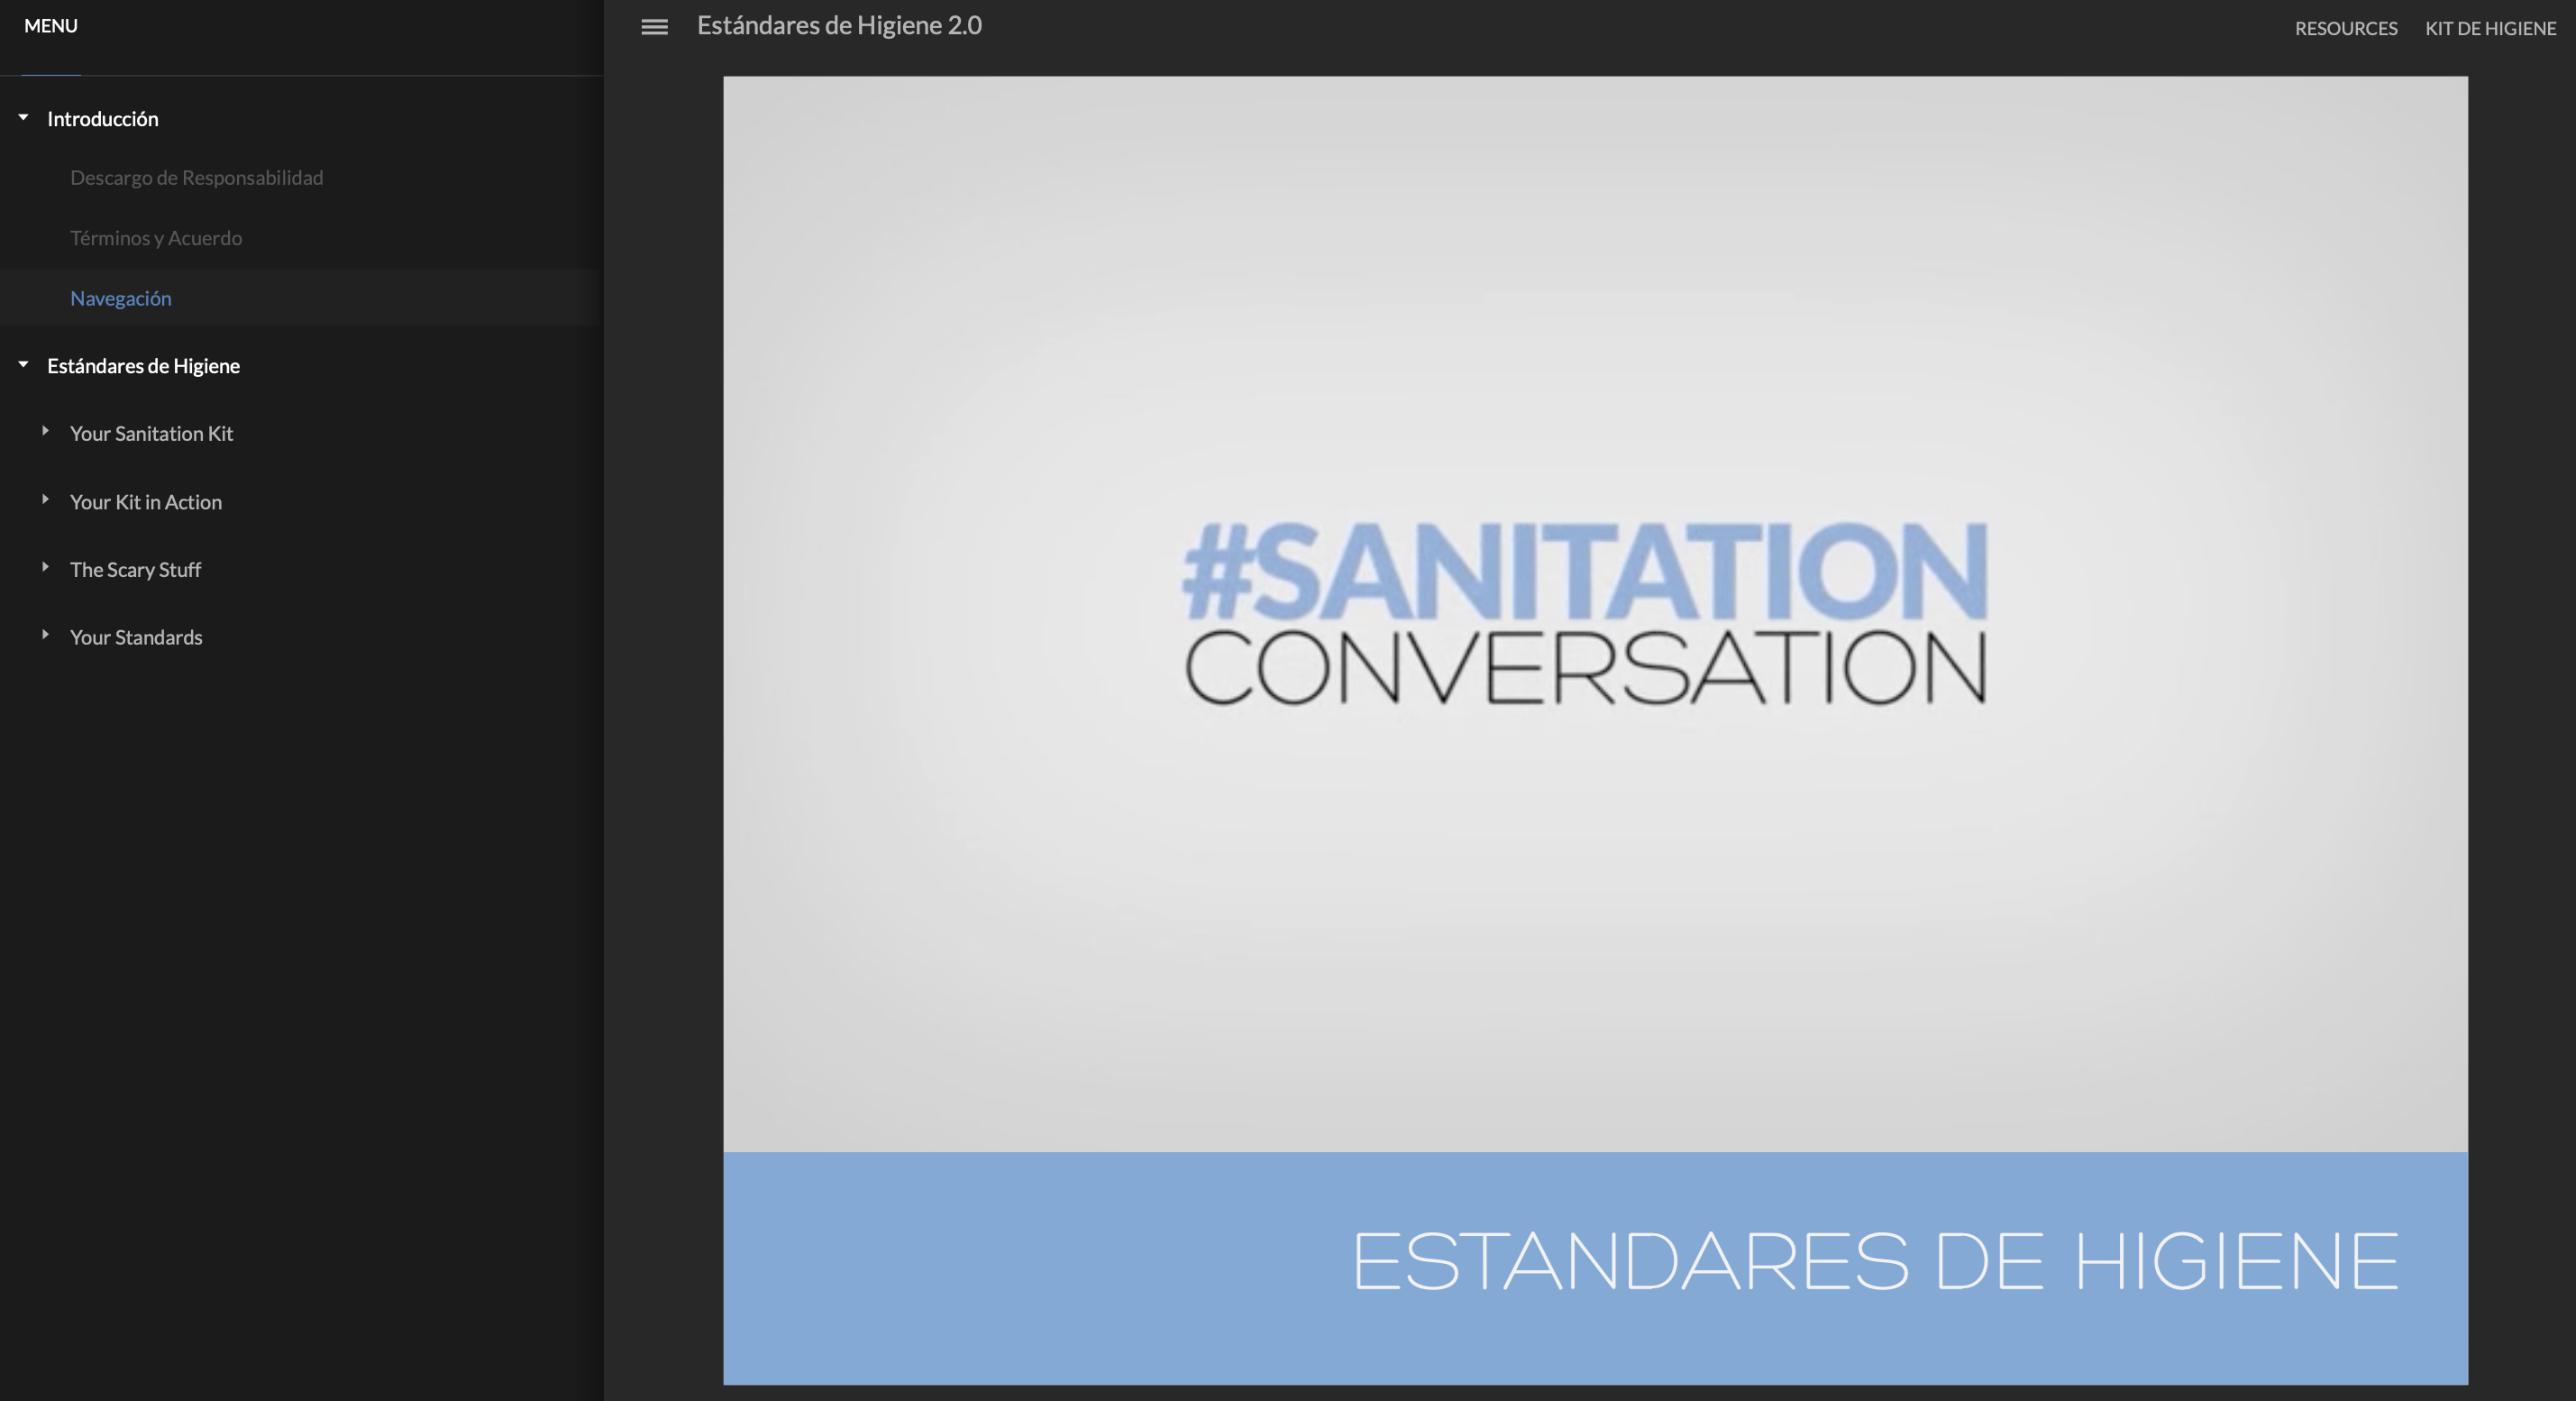 Sanitation Conversation Launches Spanish Website and Sanitation Training